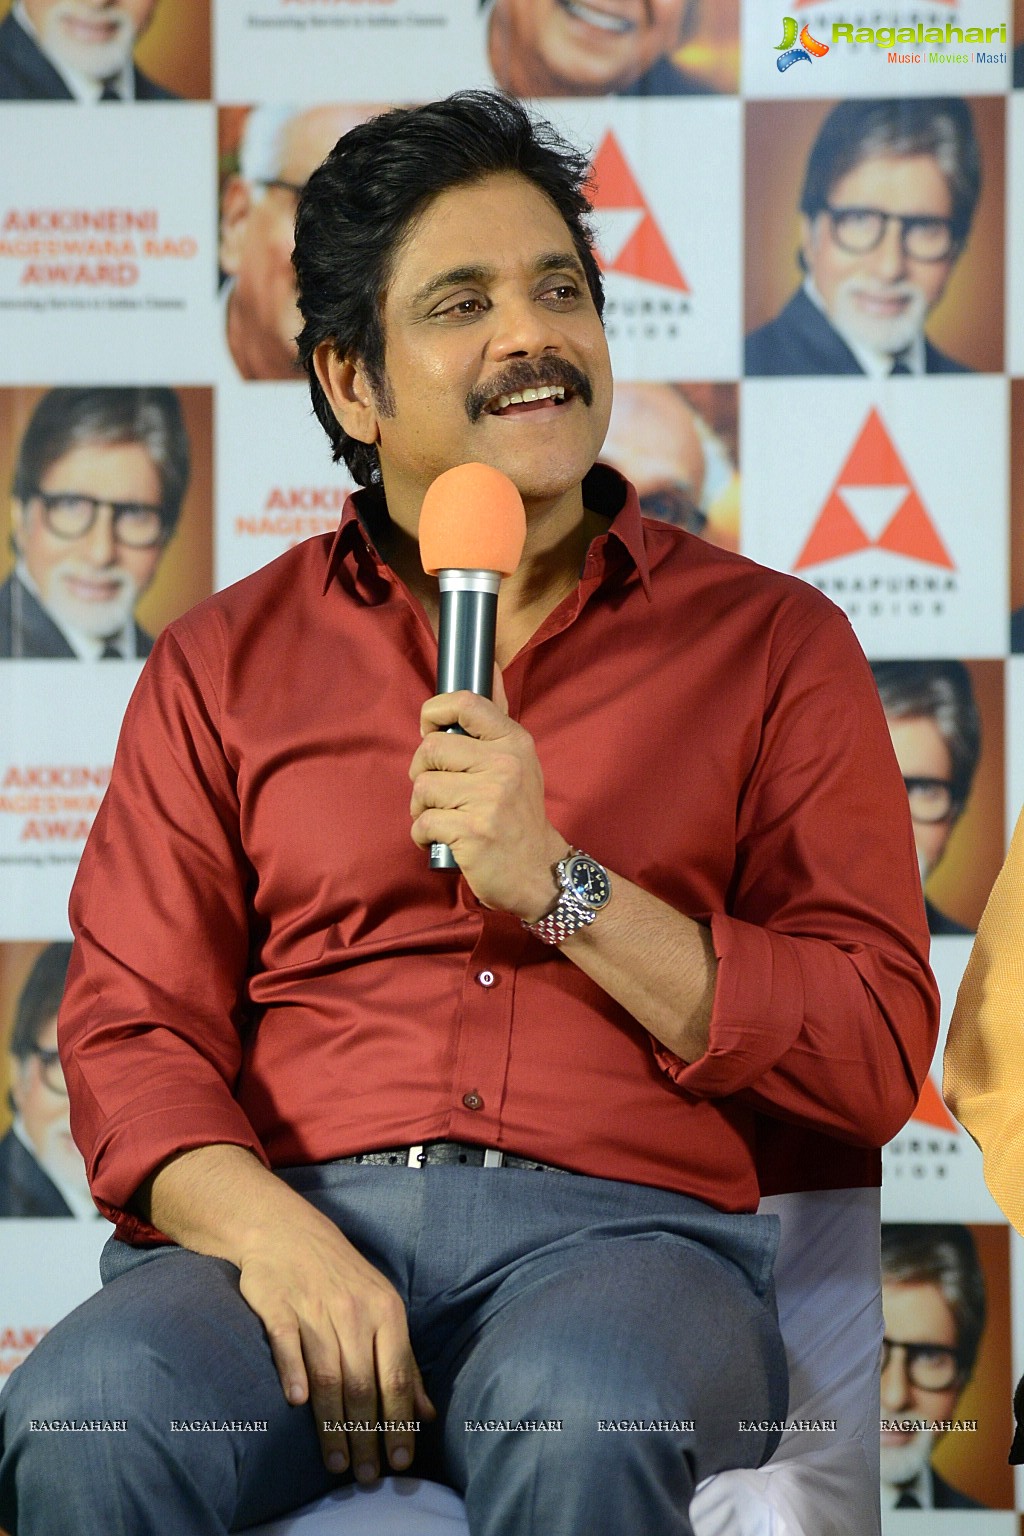 Akkineni Nageswararao Award Announcement (Dec. 2014)